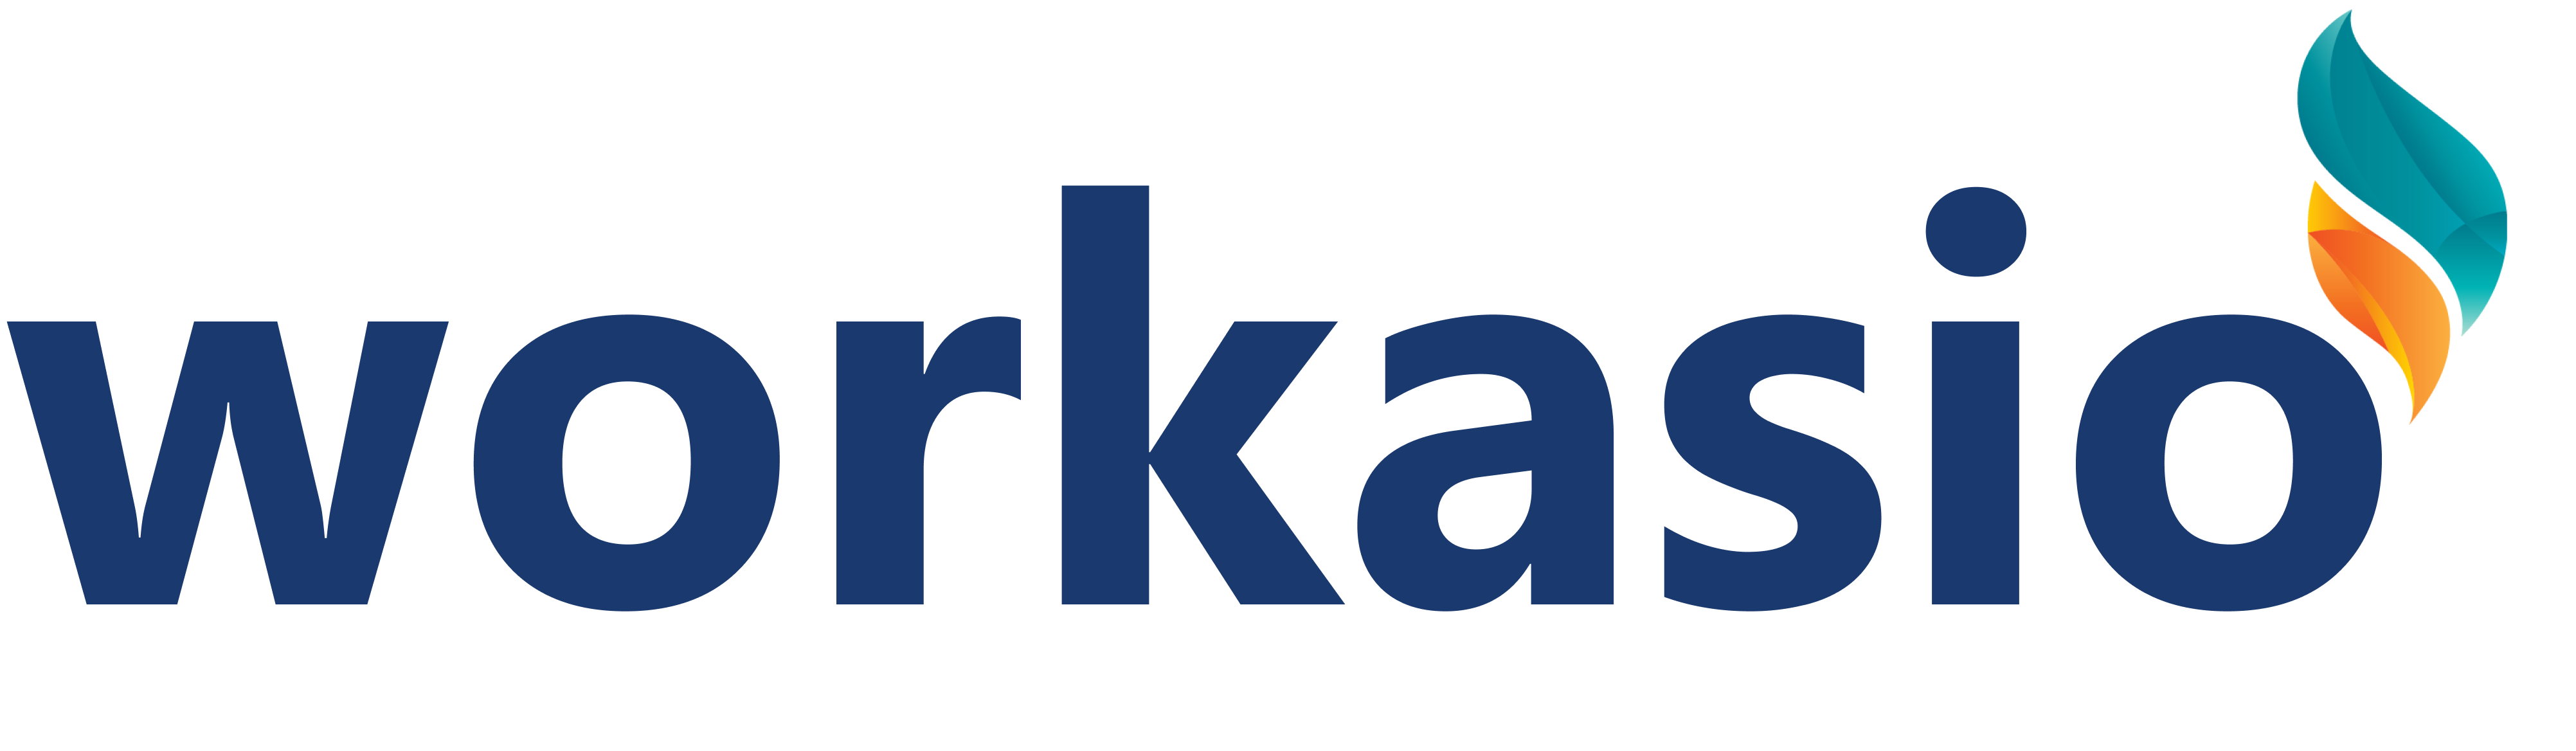 Workasio-logo